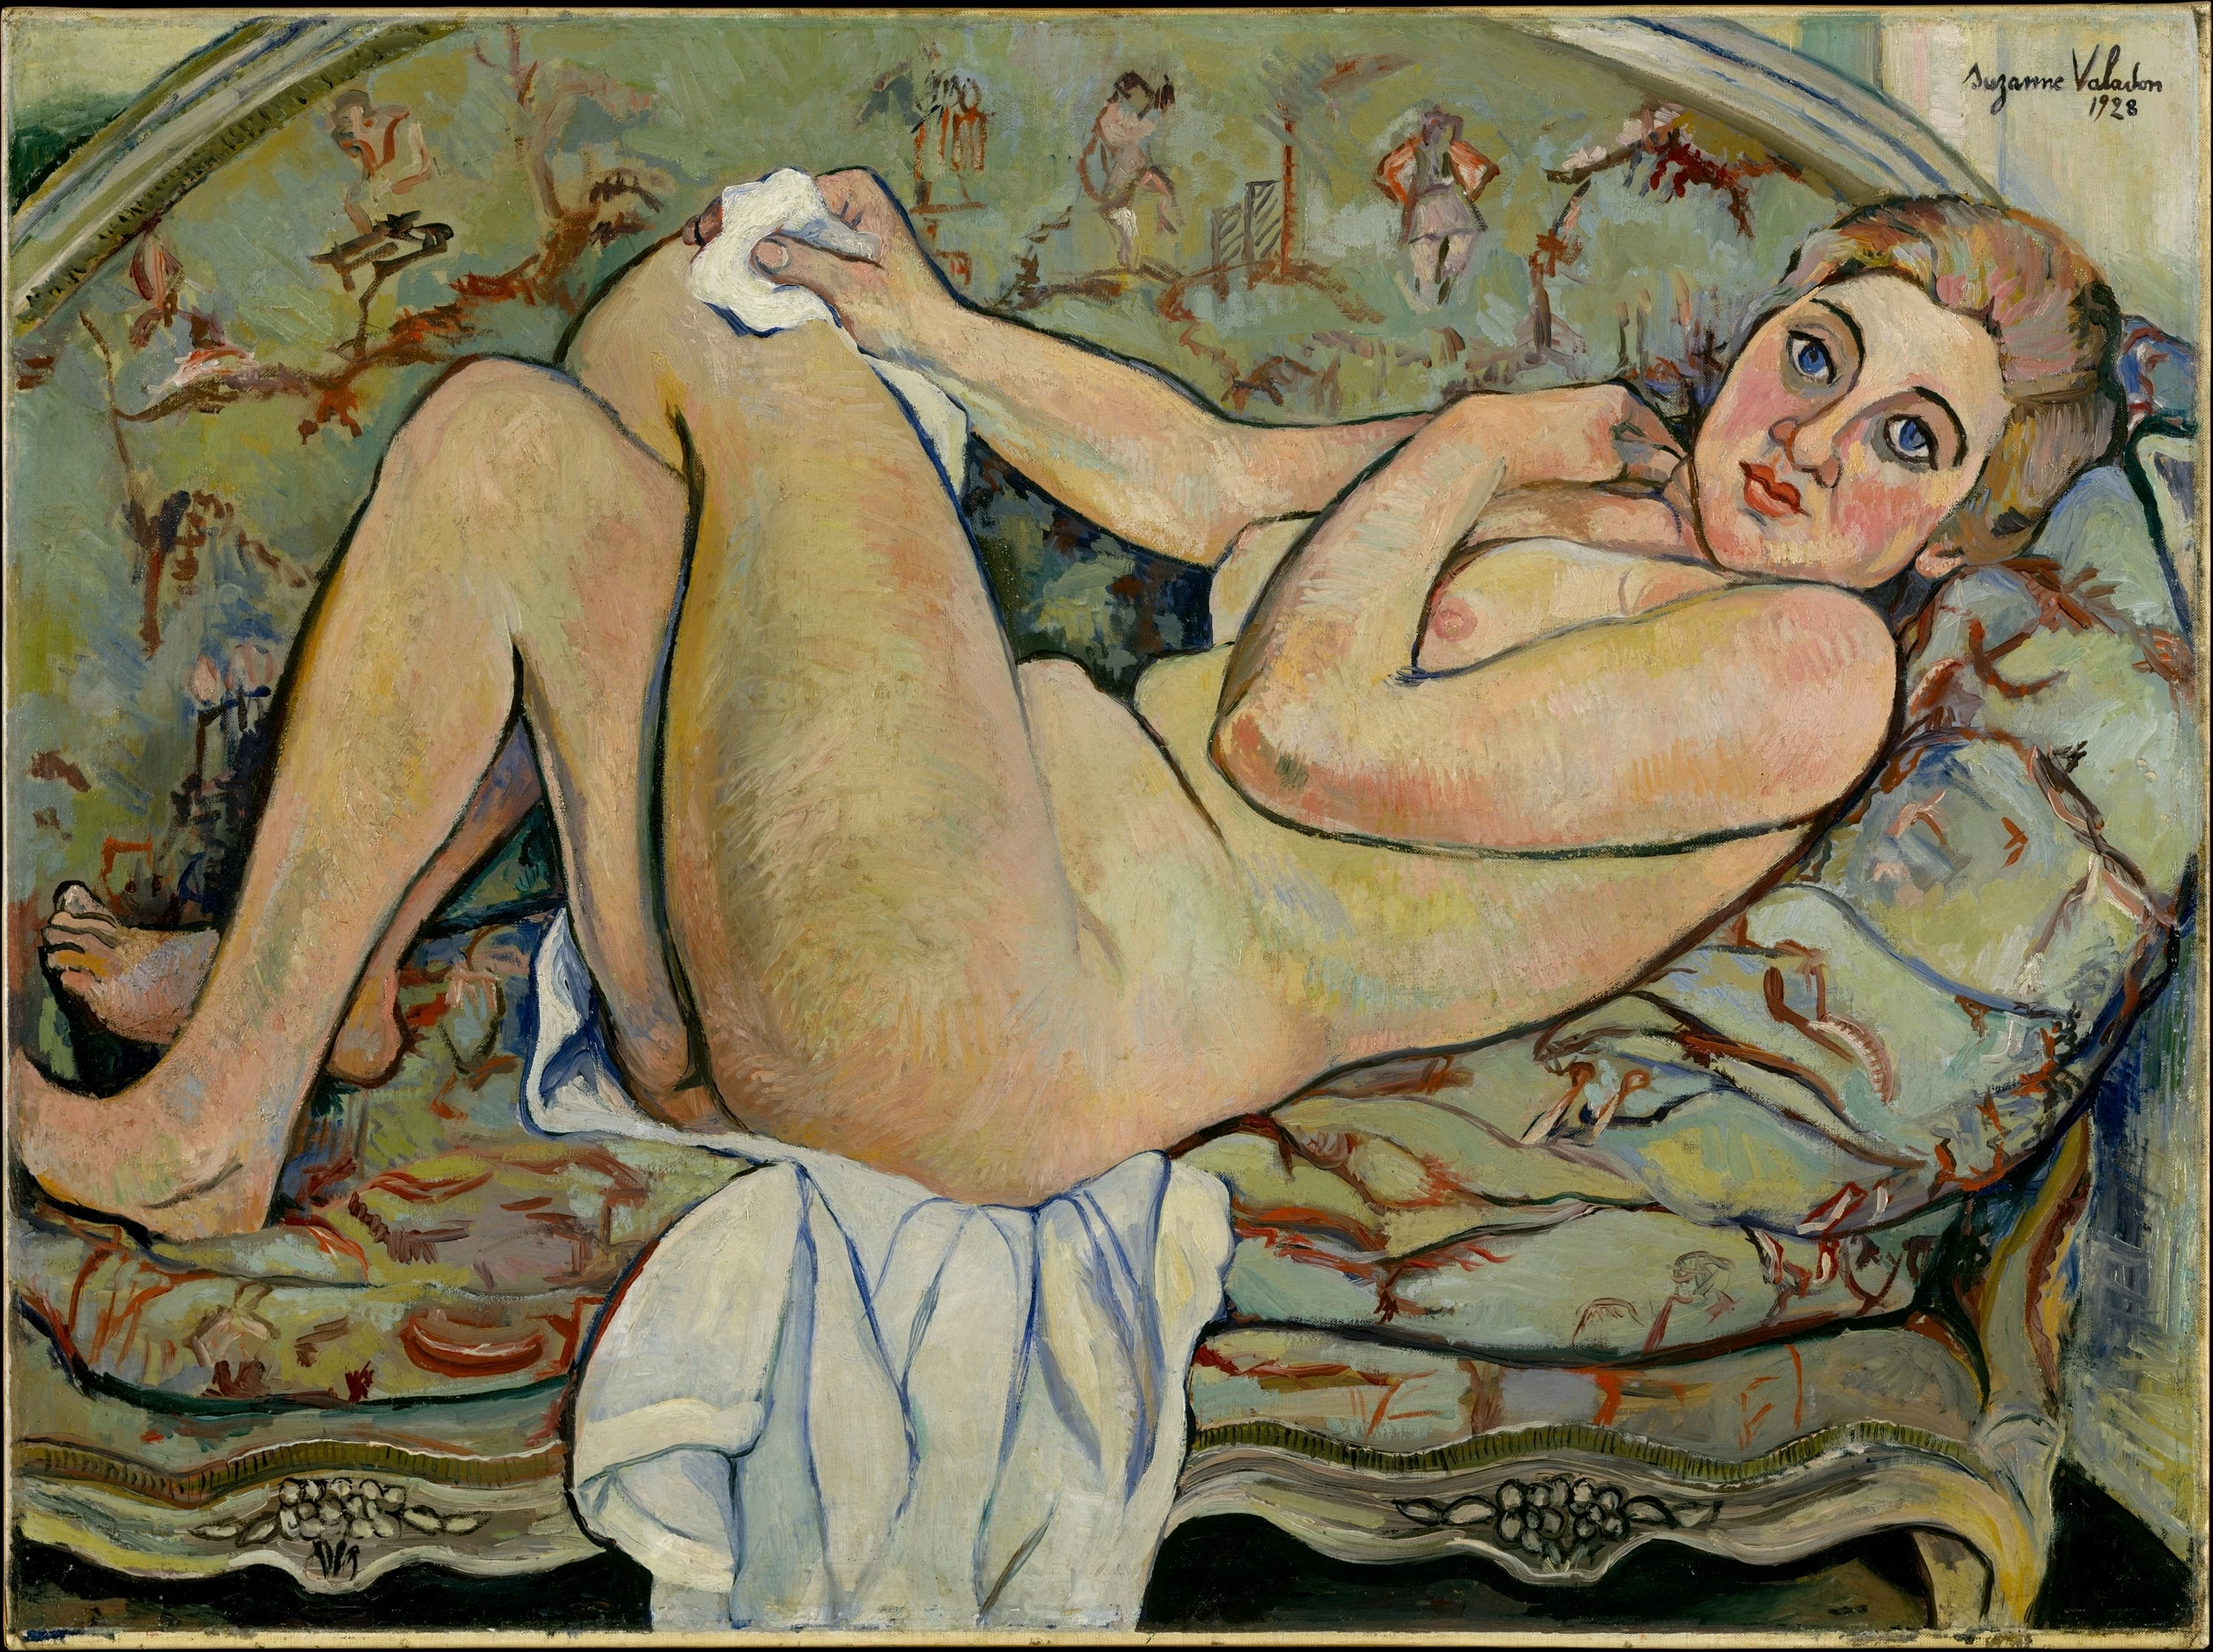 Reclining Nude, Suzanne Valadon